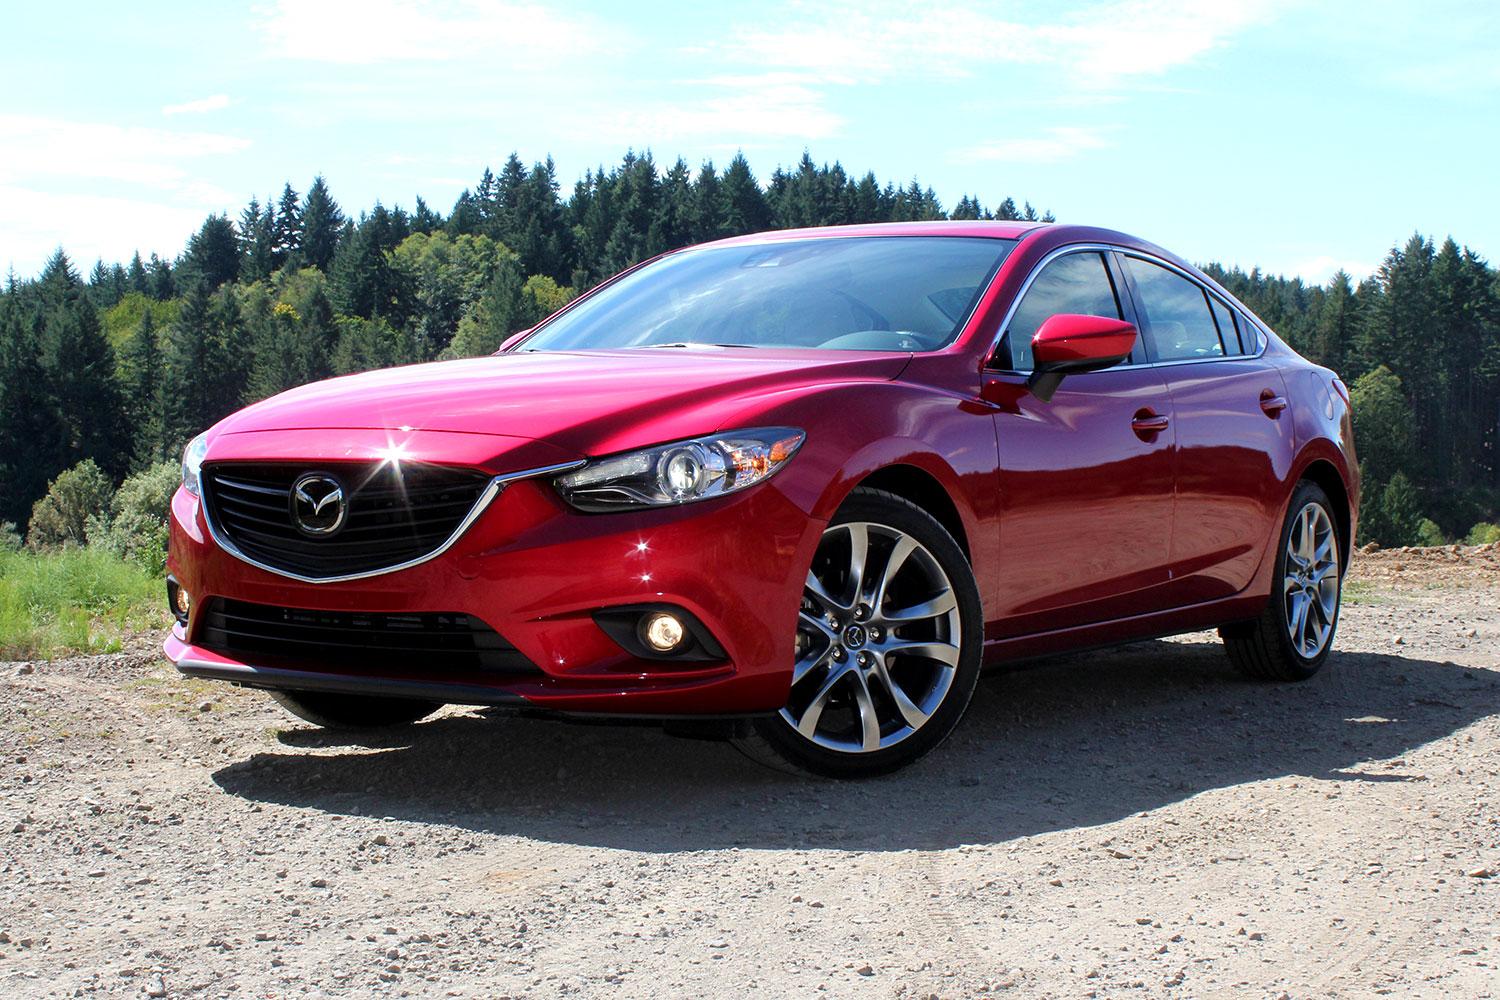 2015 Mazda Mazda 6 front angle